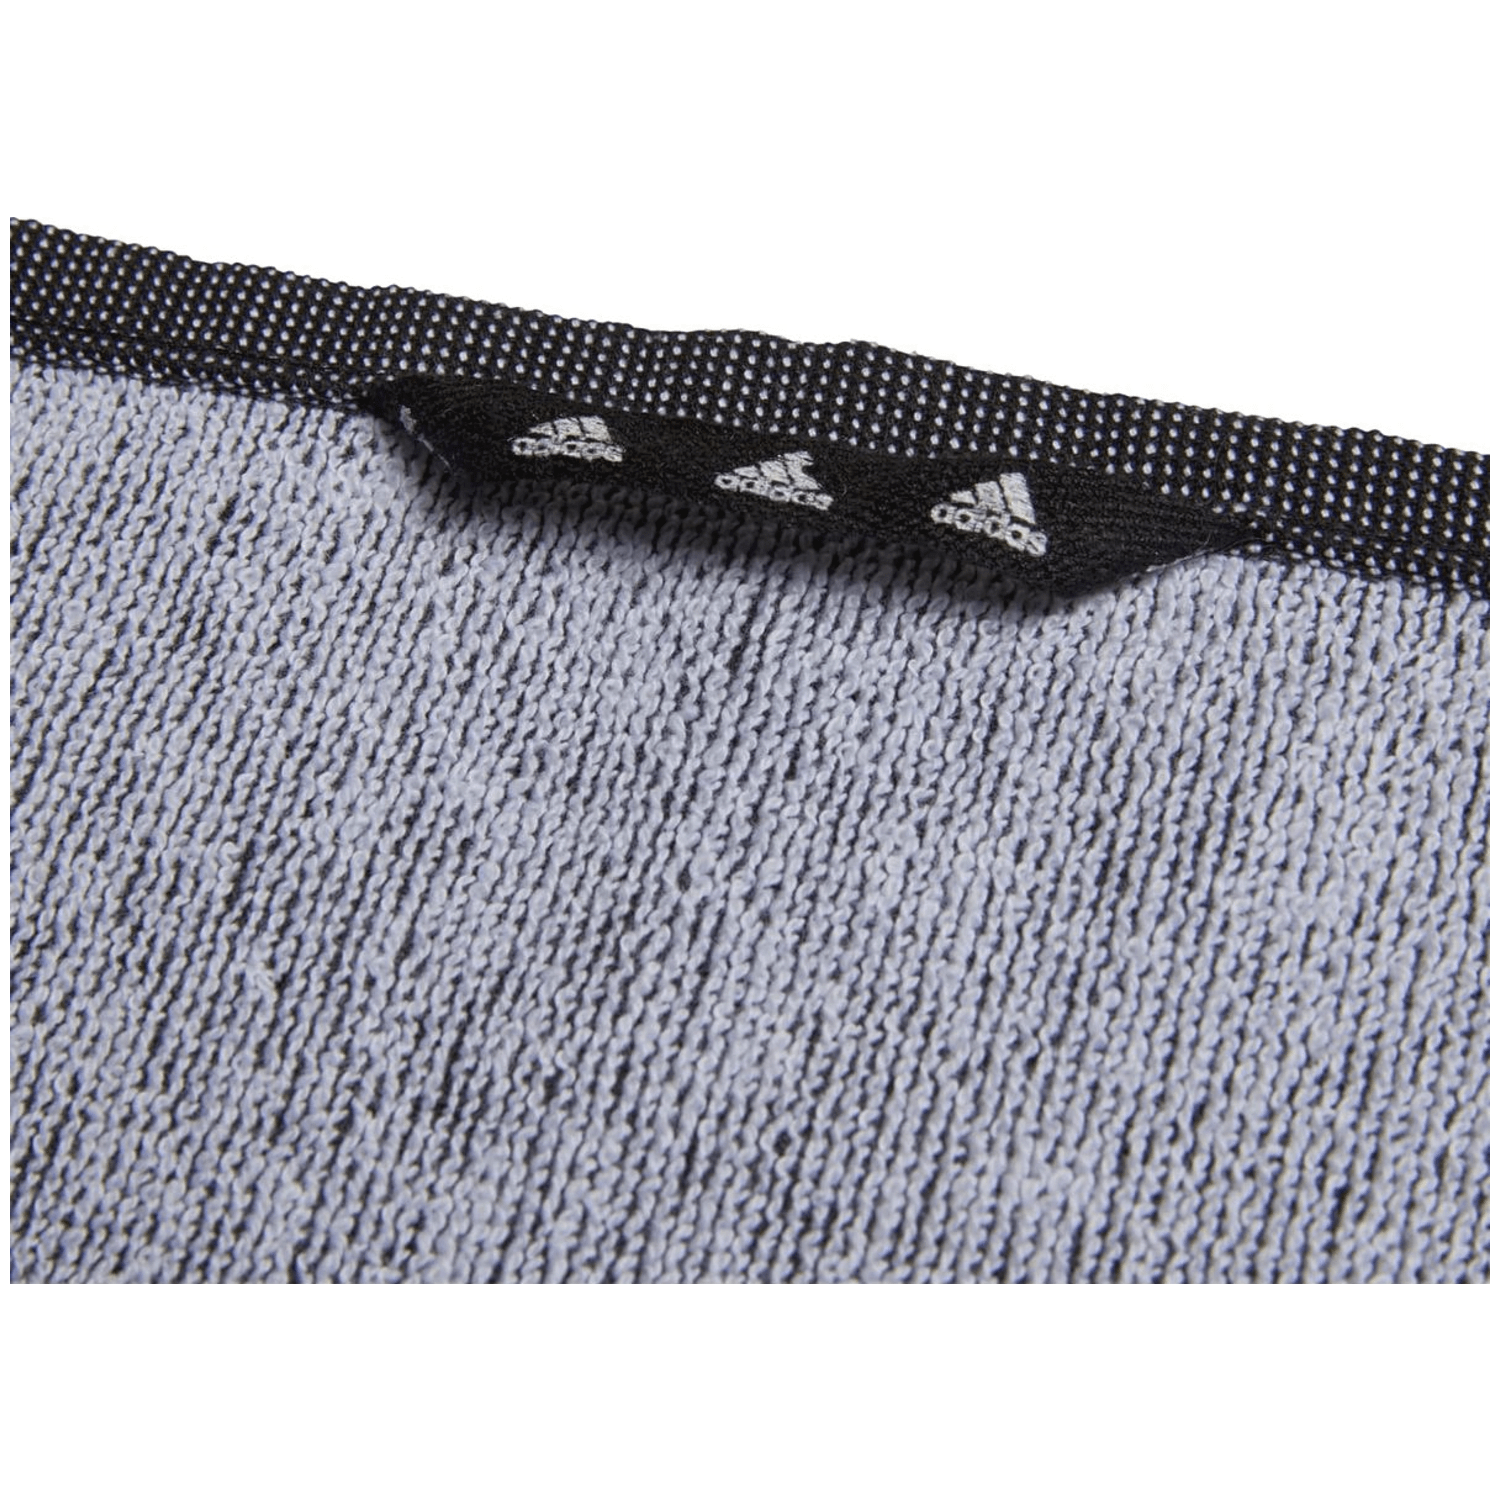 Adidas Handtuch L Unisex